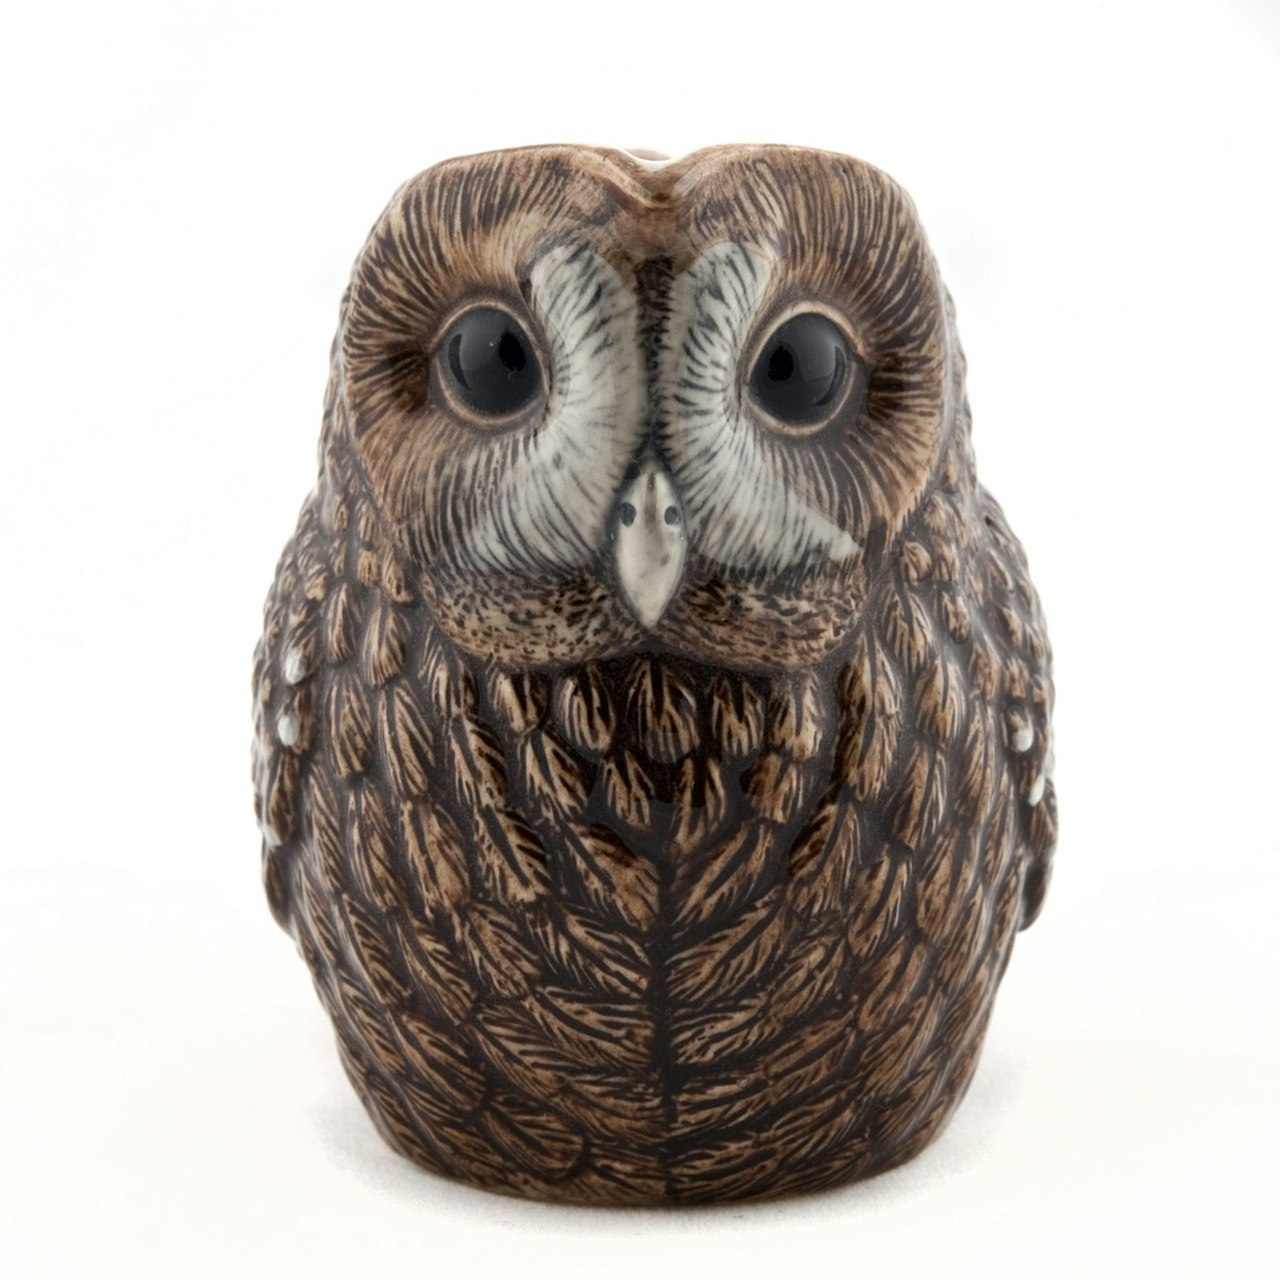 Owl jug